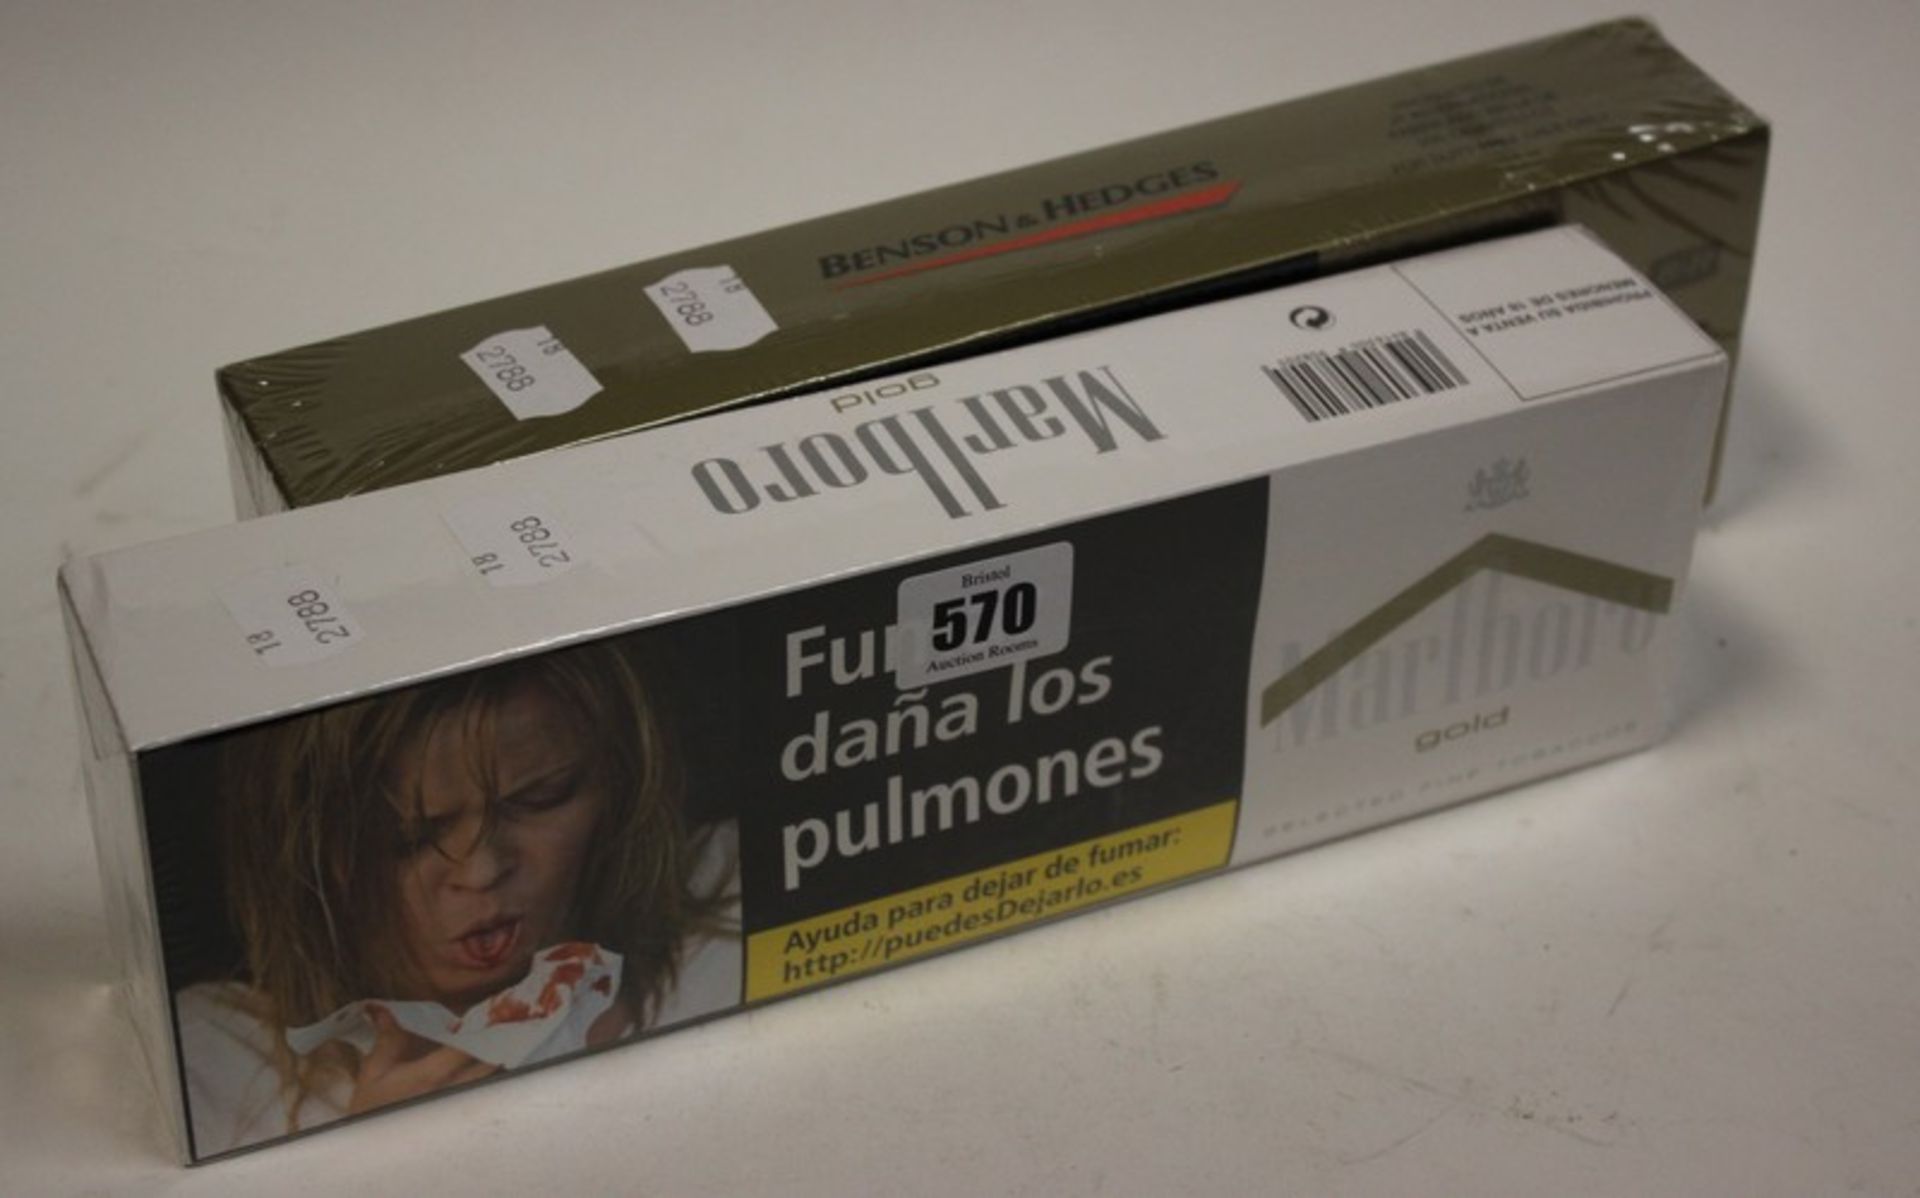 A carton of Benson & Hedges special filter cigarettes (200), a carton of Marlboro gold cigarettes (